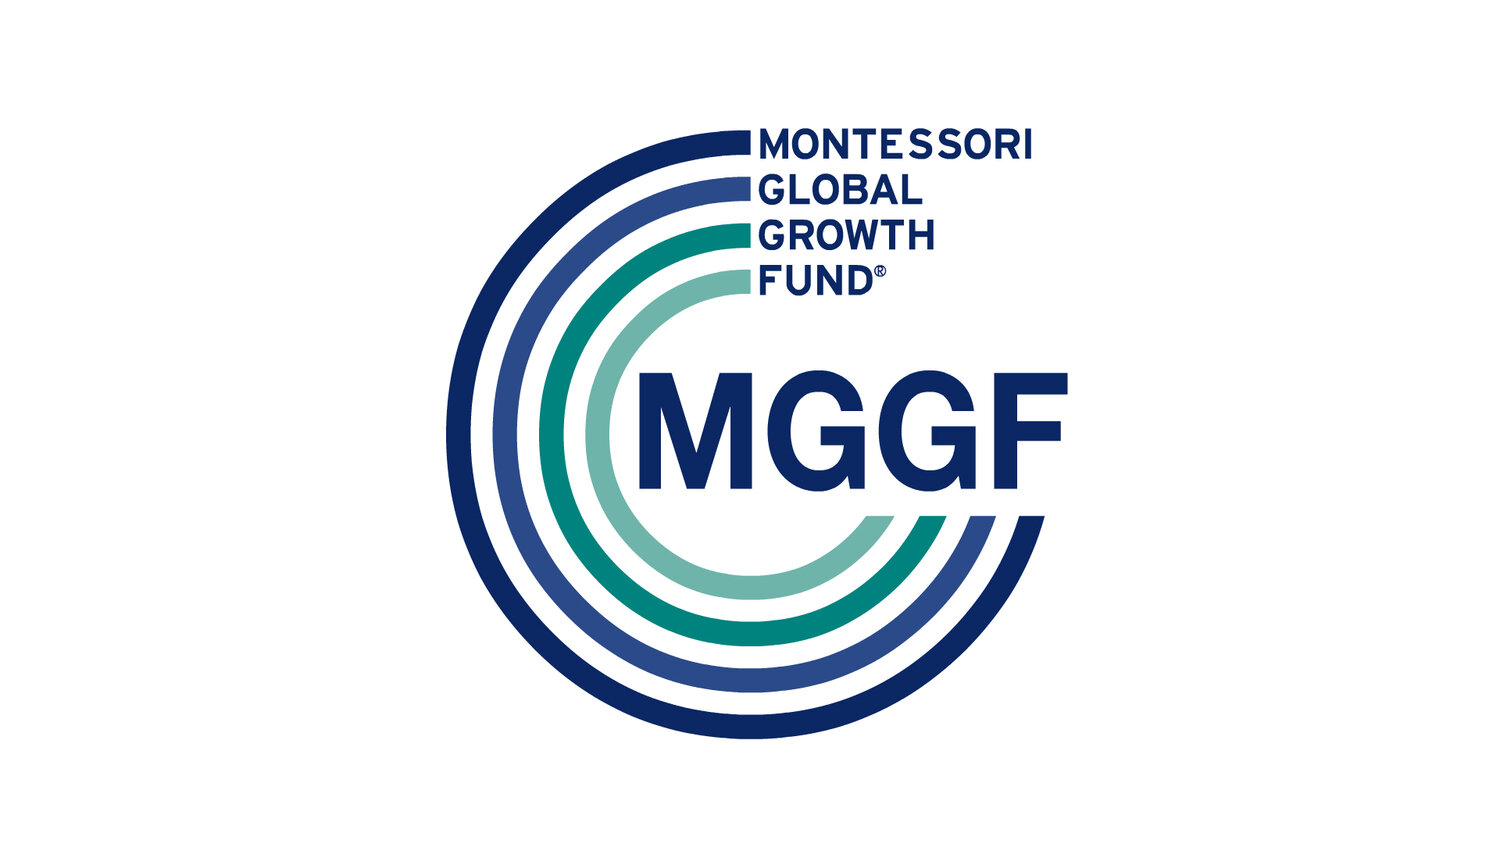 Montessori Global Growth Fund